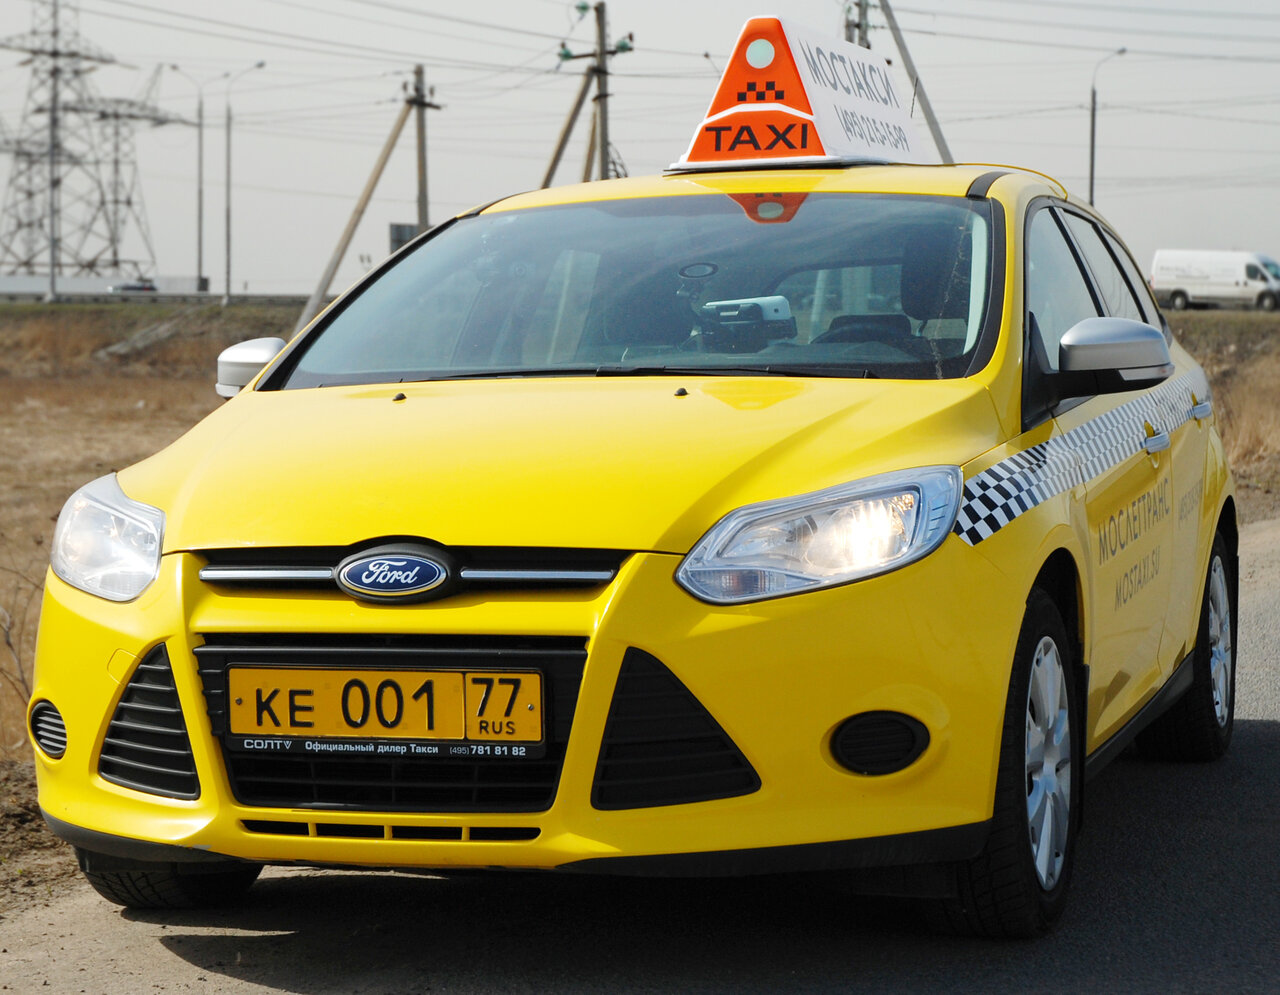 Включи где такси. Такси. Машина "такси". Автомобиль «такси». Желтая машина такси.